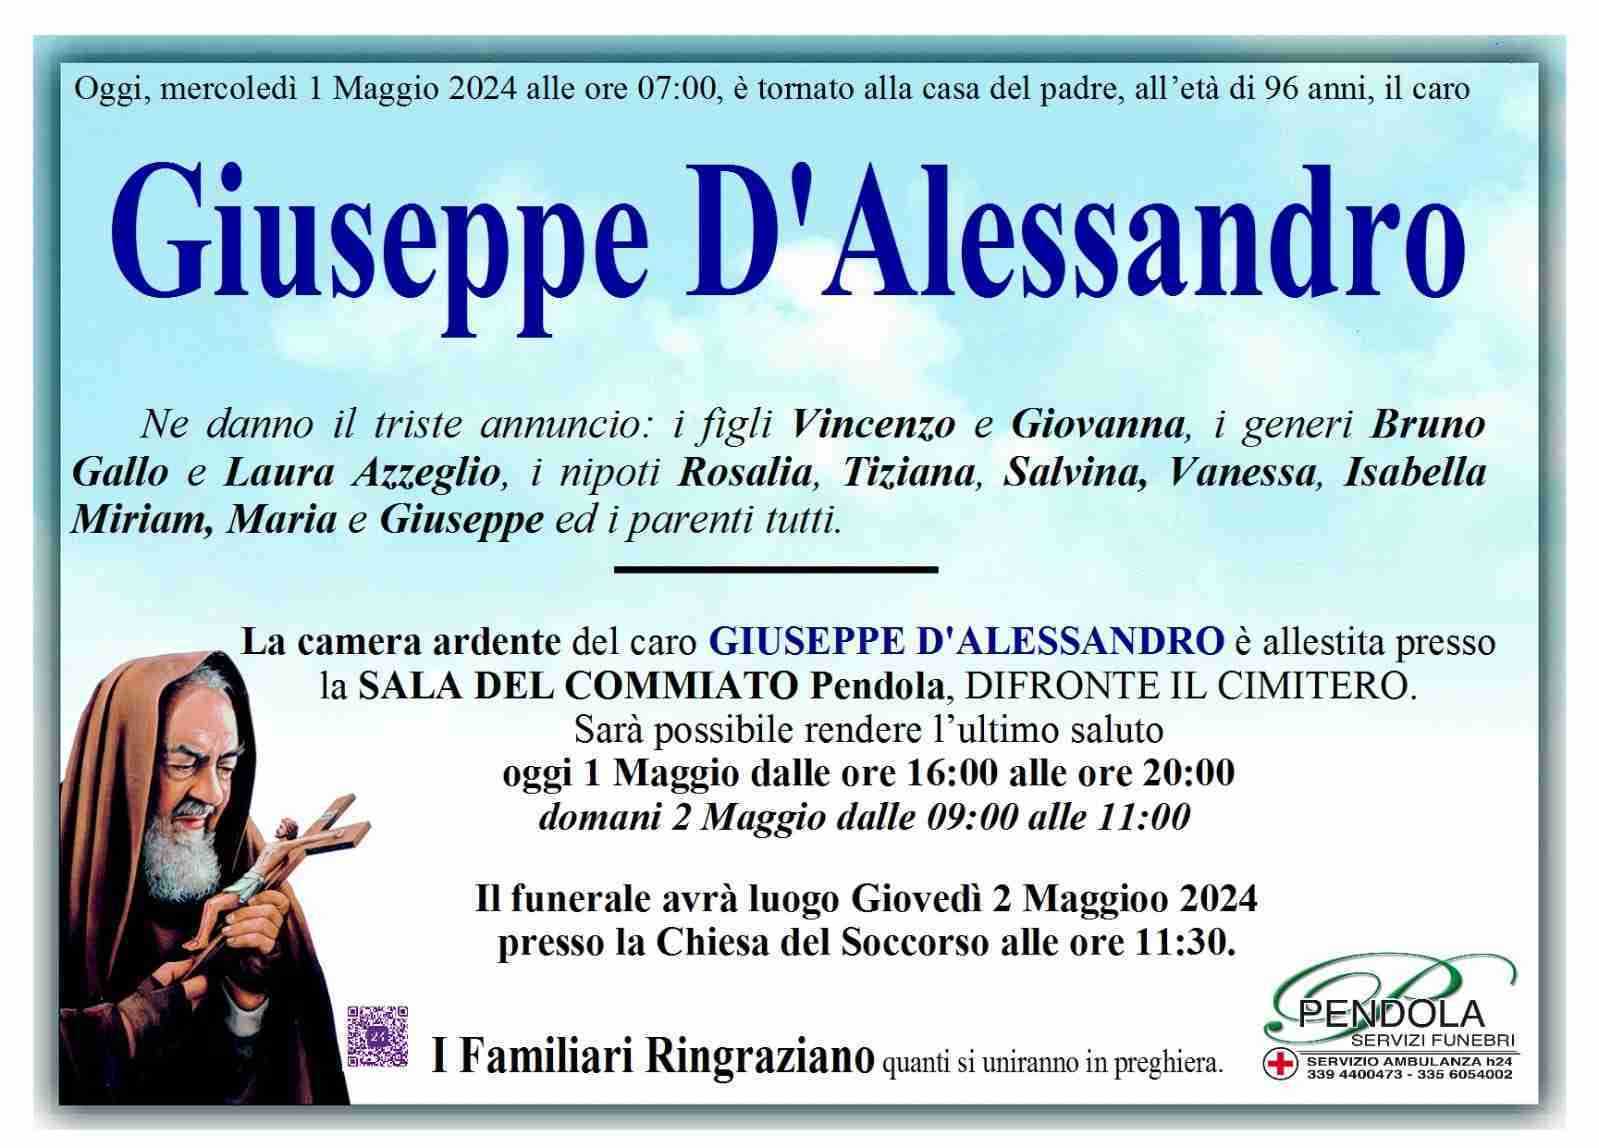 Giuseppe D'Alessandro